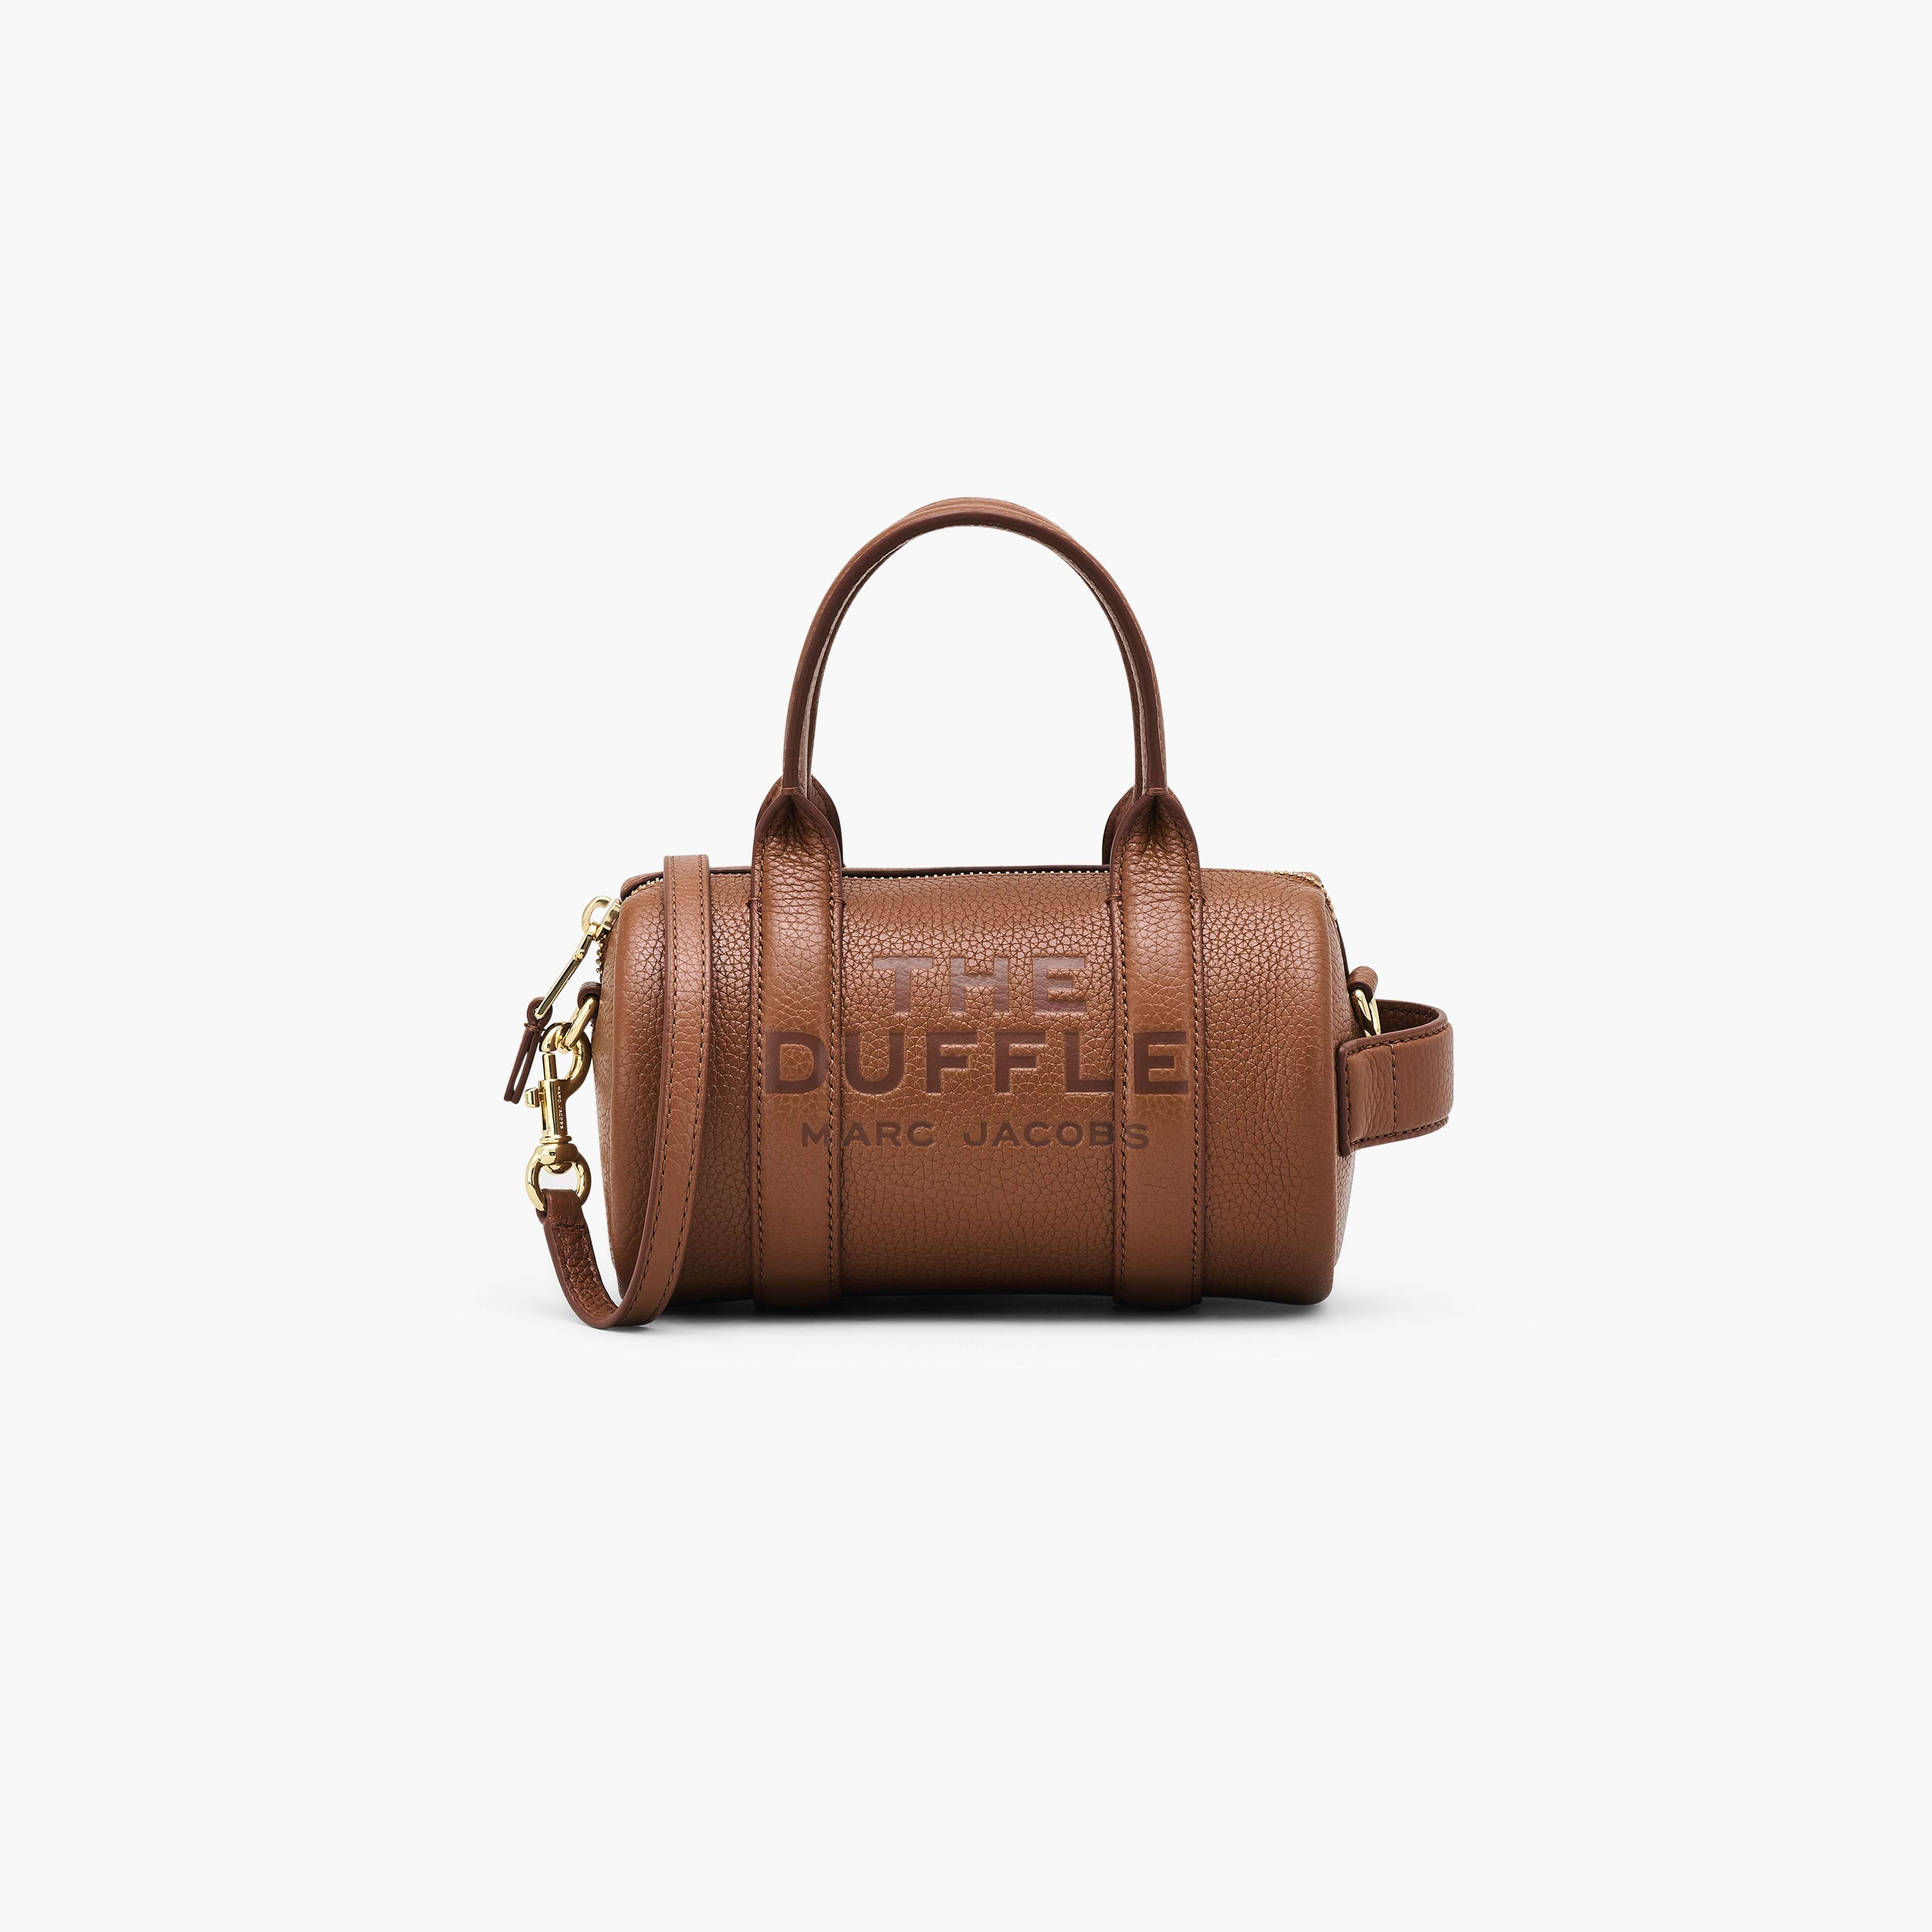 The Leather Mini Duffle Bag in Argan Oil